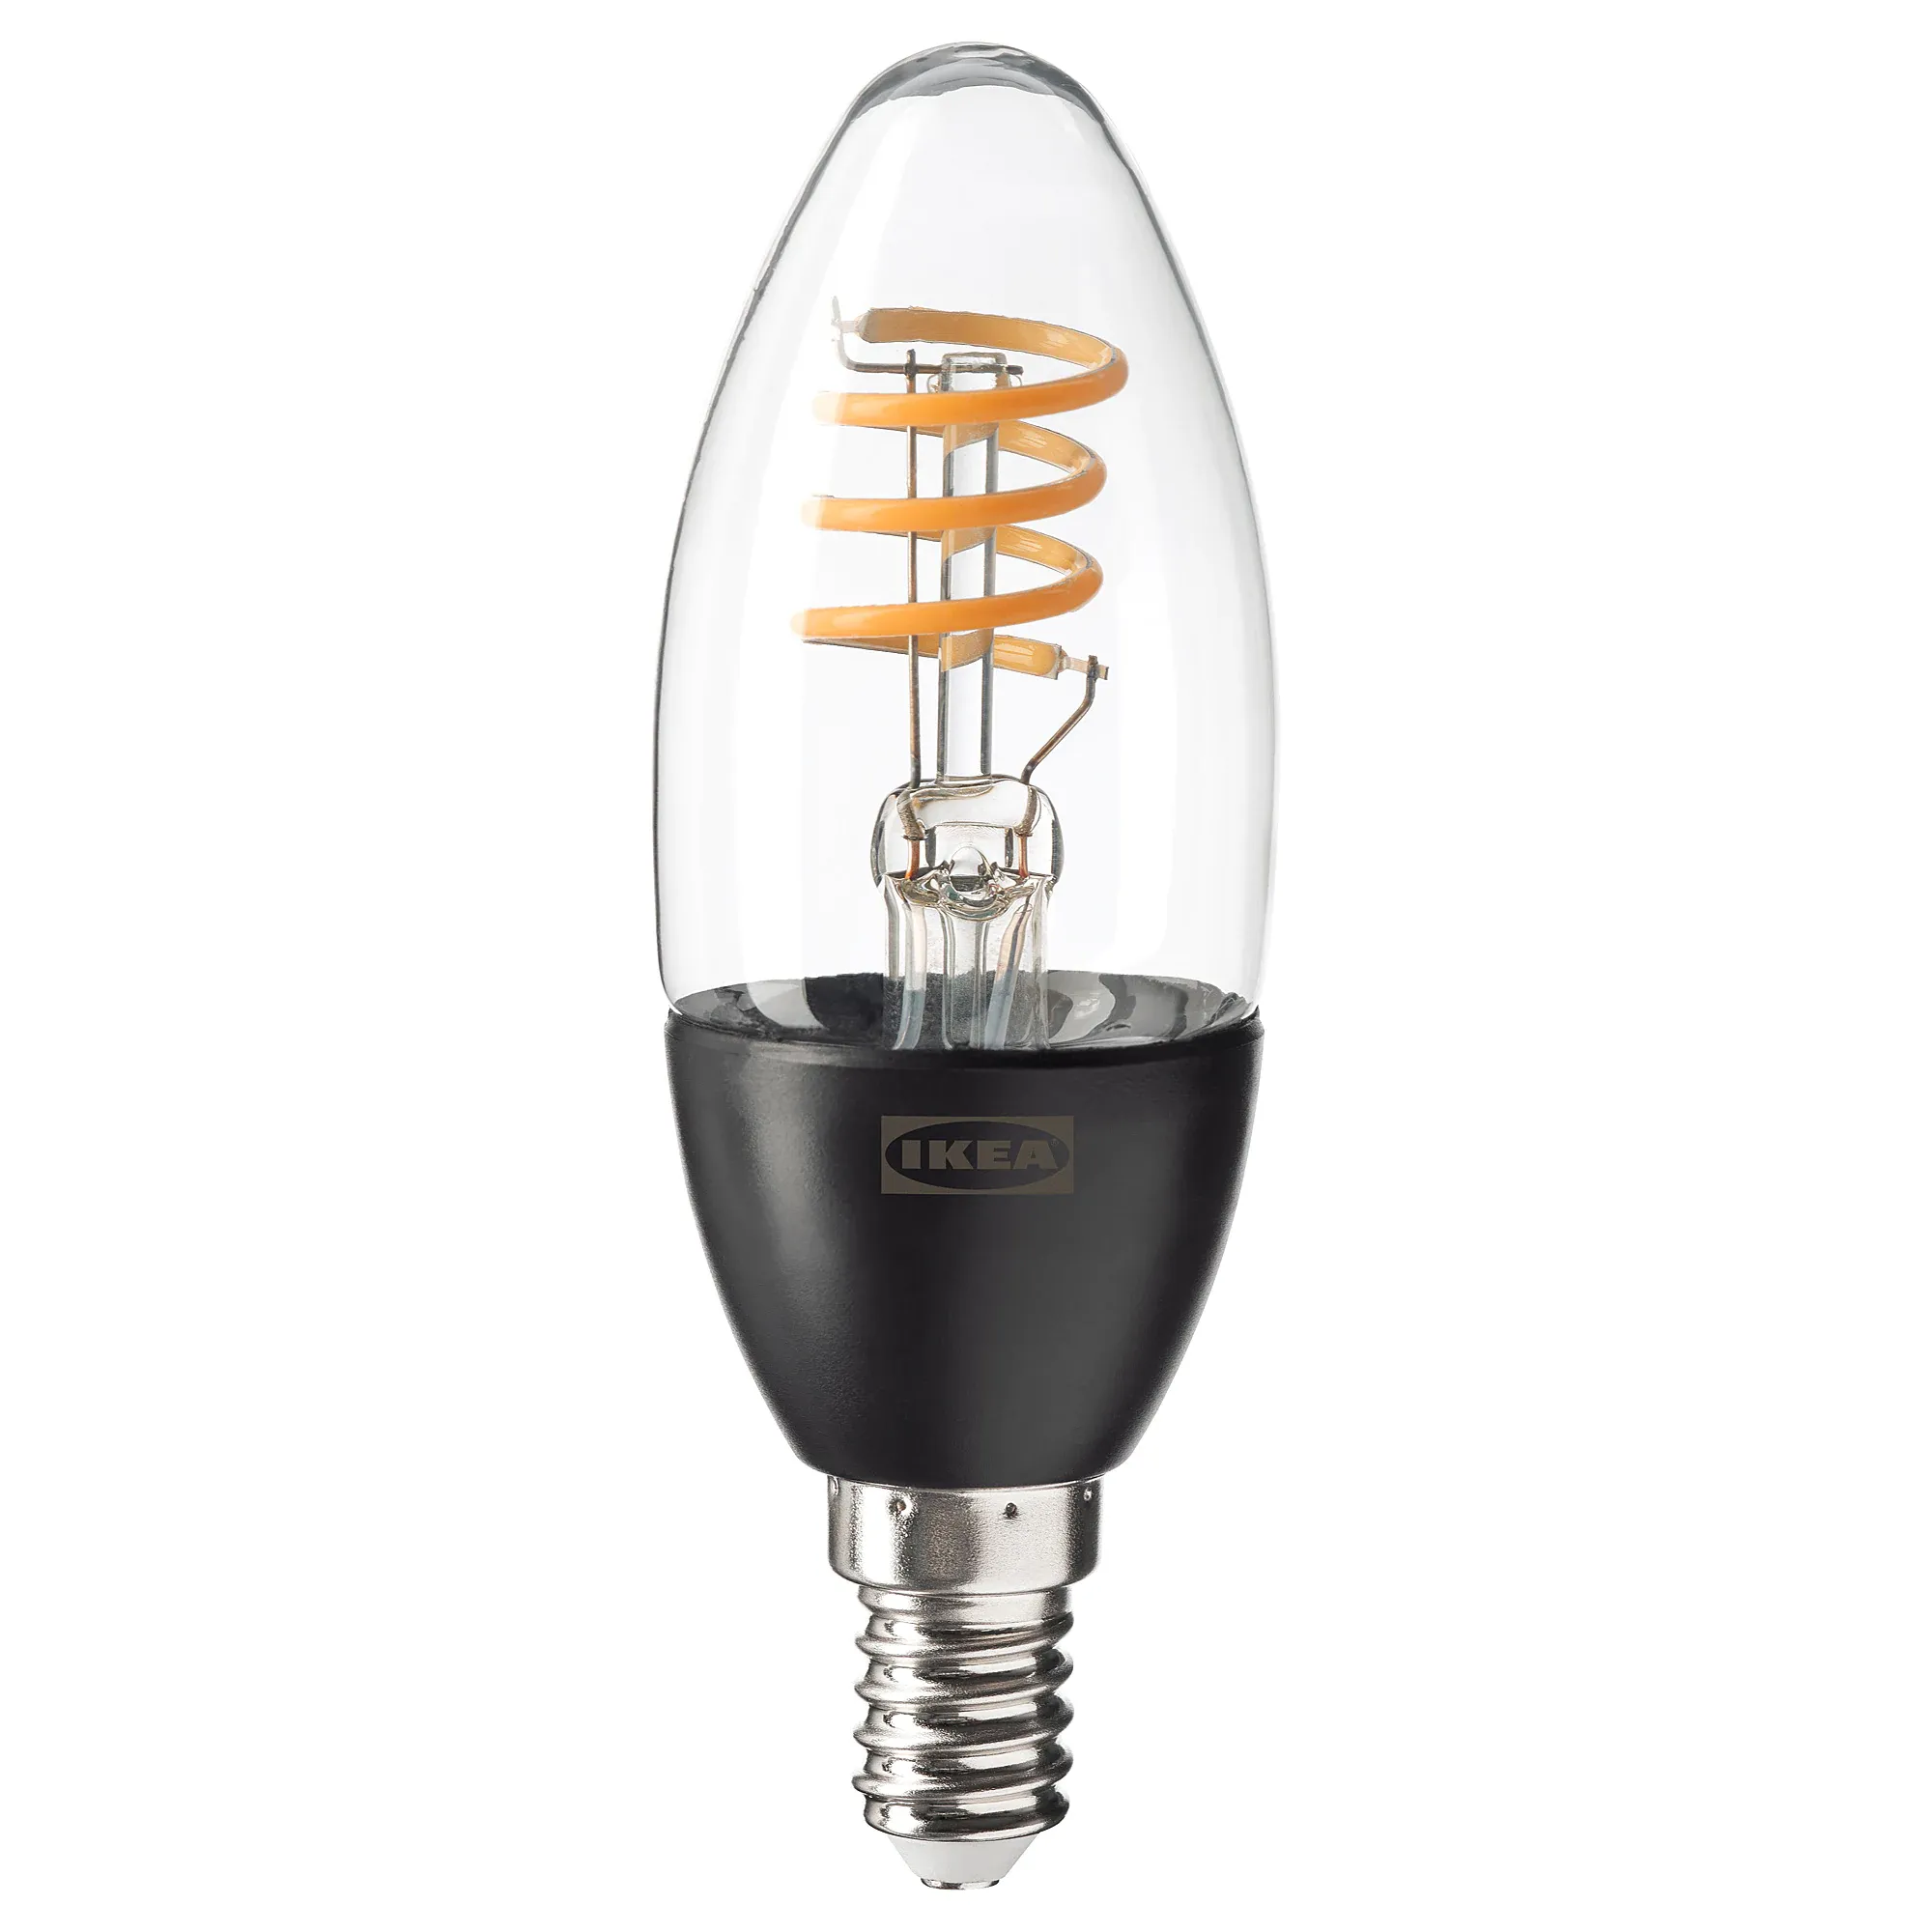 Tradfri LED bulb E14 250 lumen WW clear , dimmable